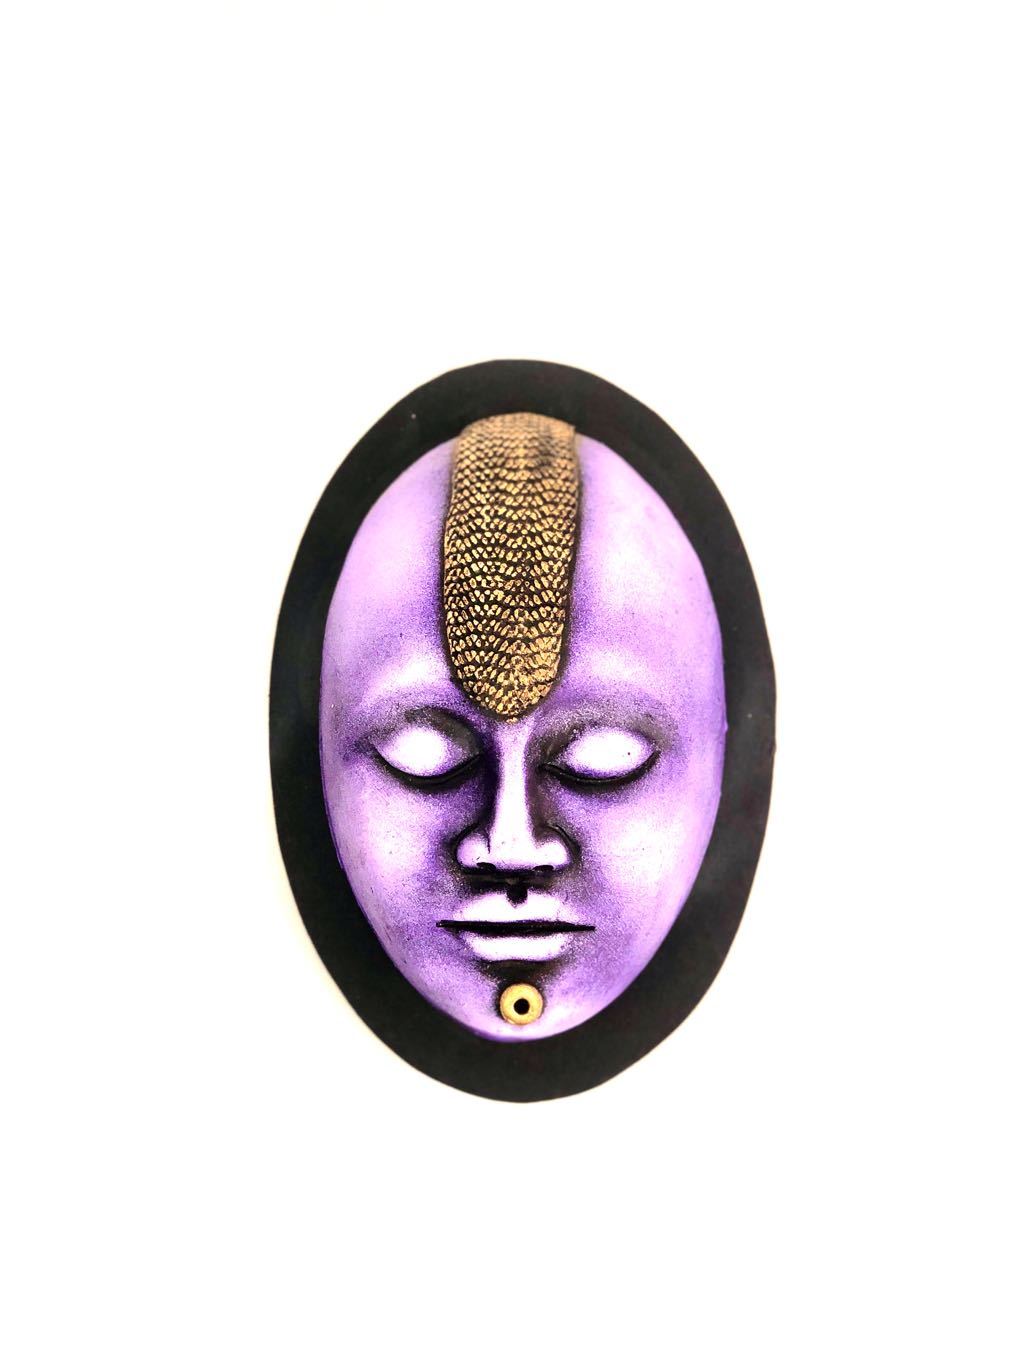 Creative Terracotta Masks In Vibrant Shades On MDF Hanging Tamrapatra